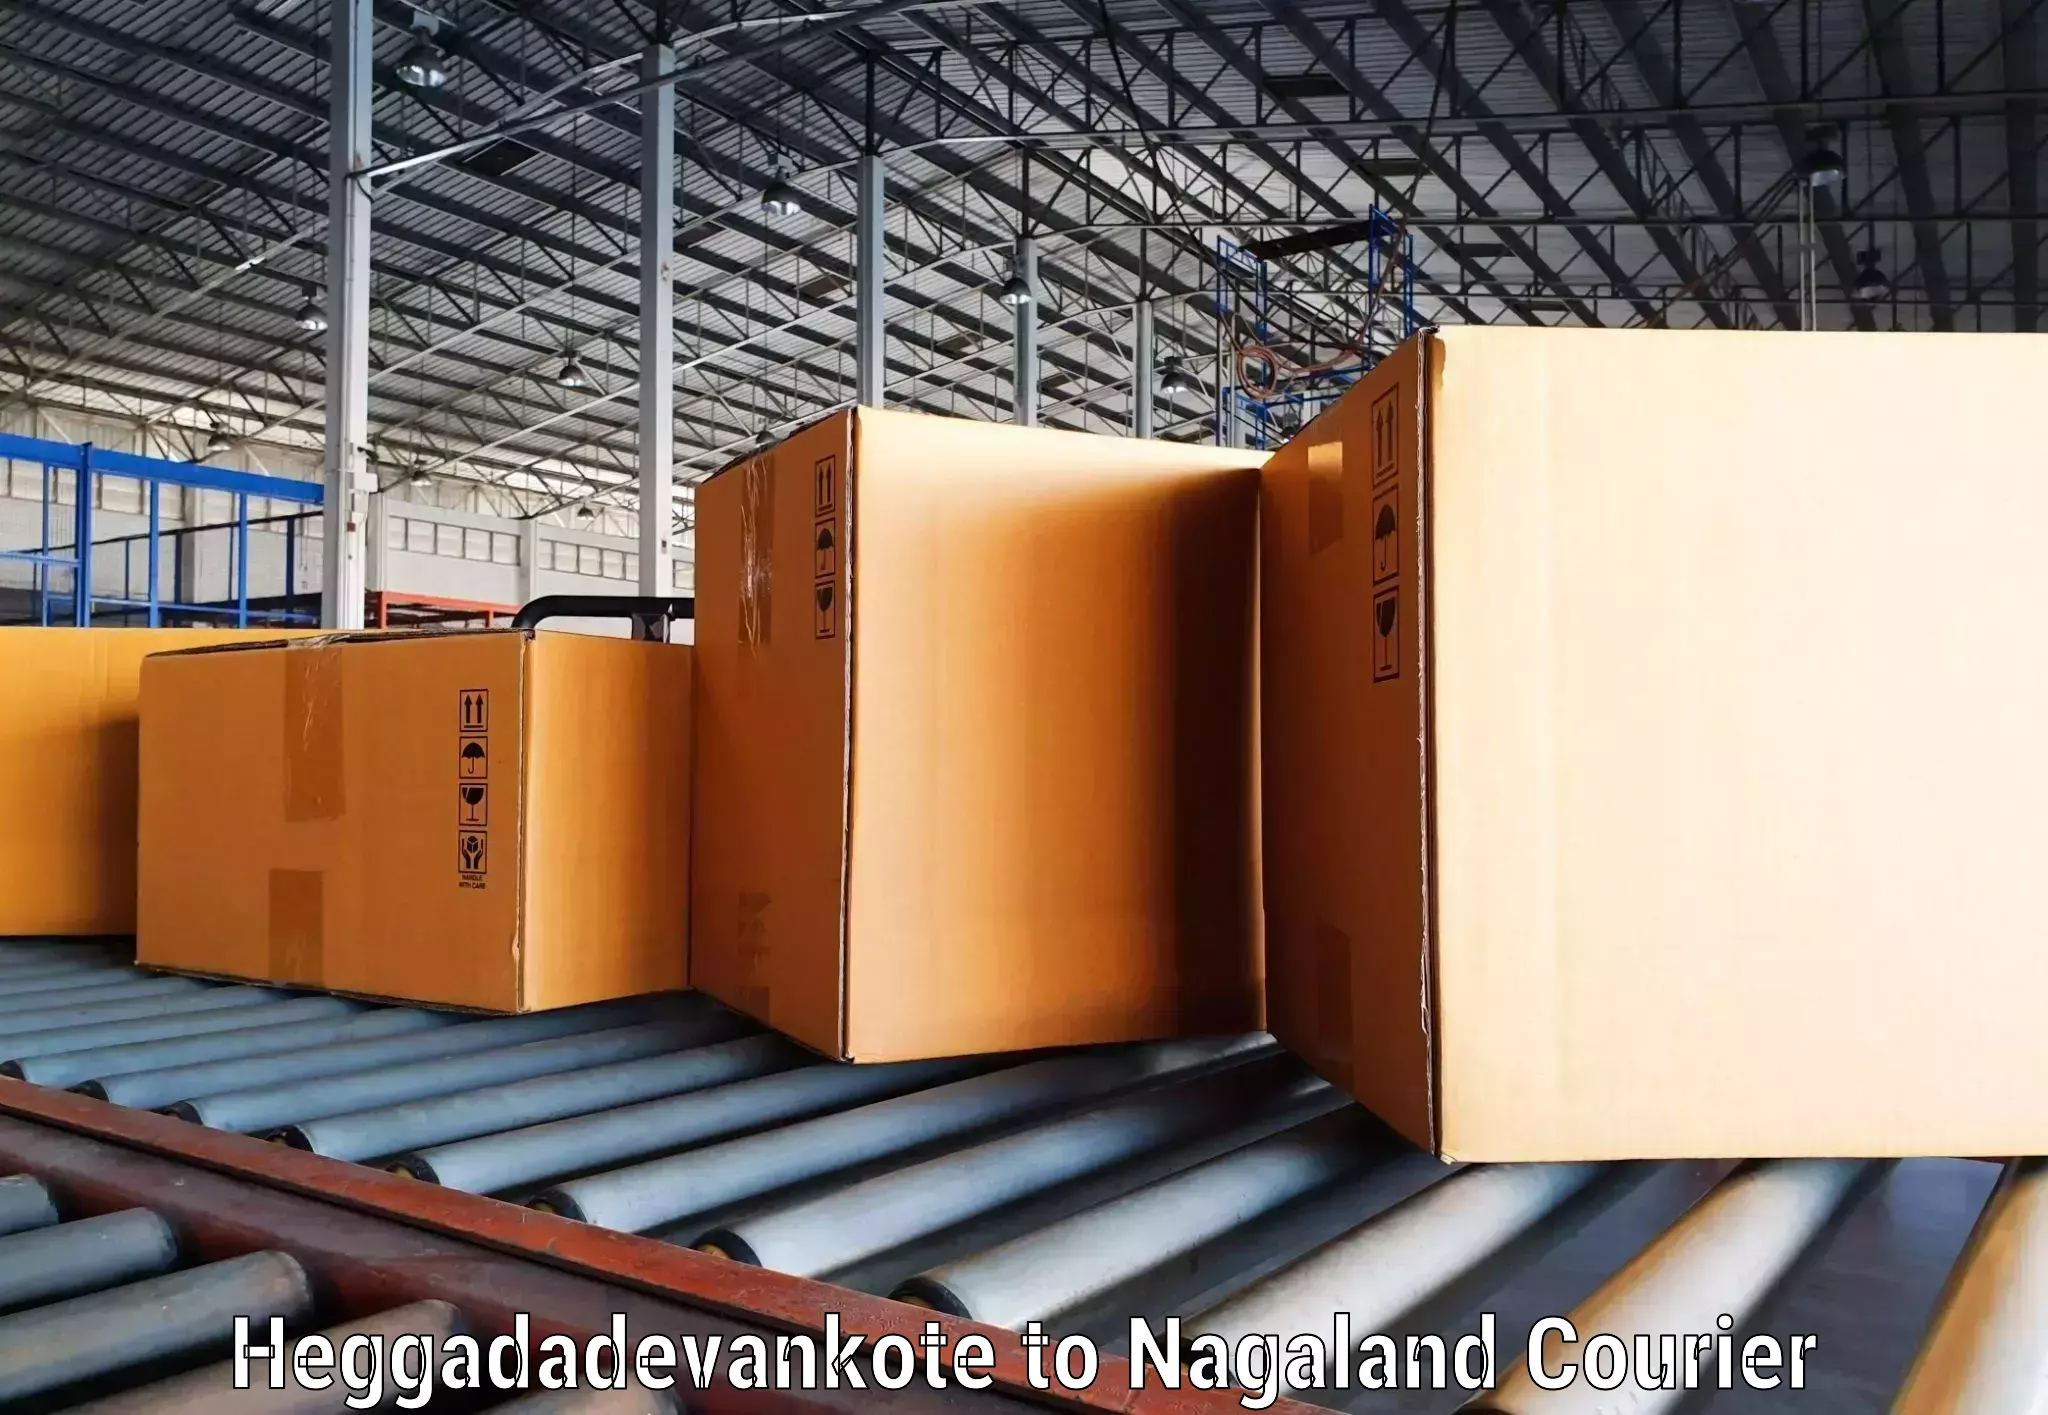 Digital shipping tools Heggadadevankote to Nagaland